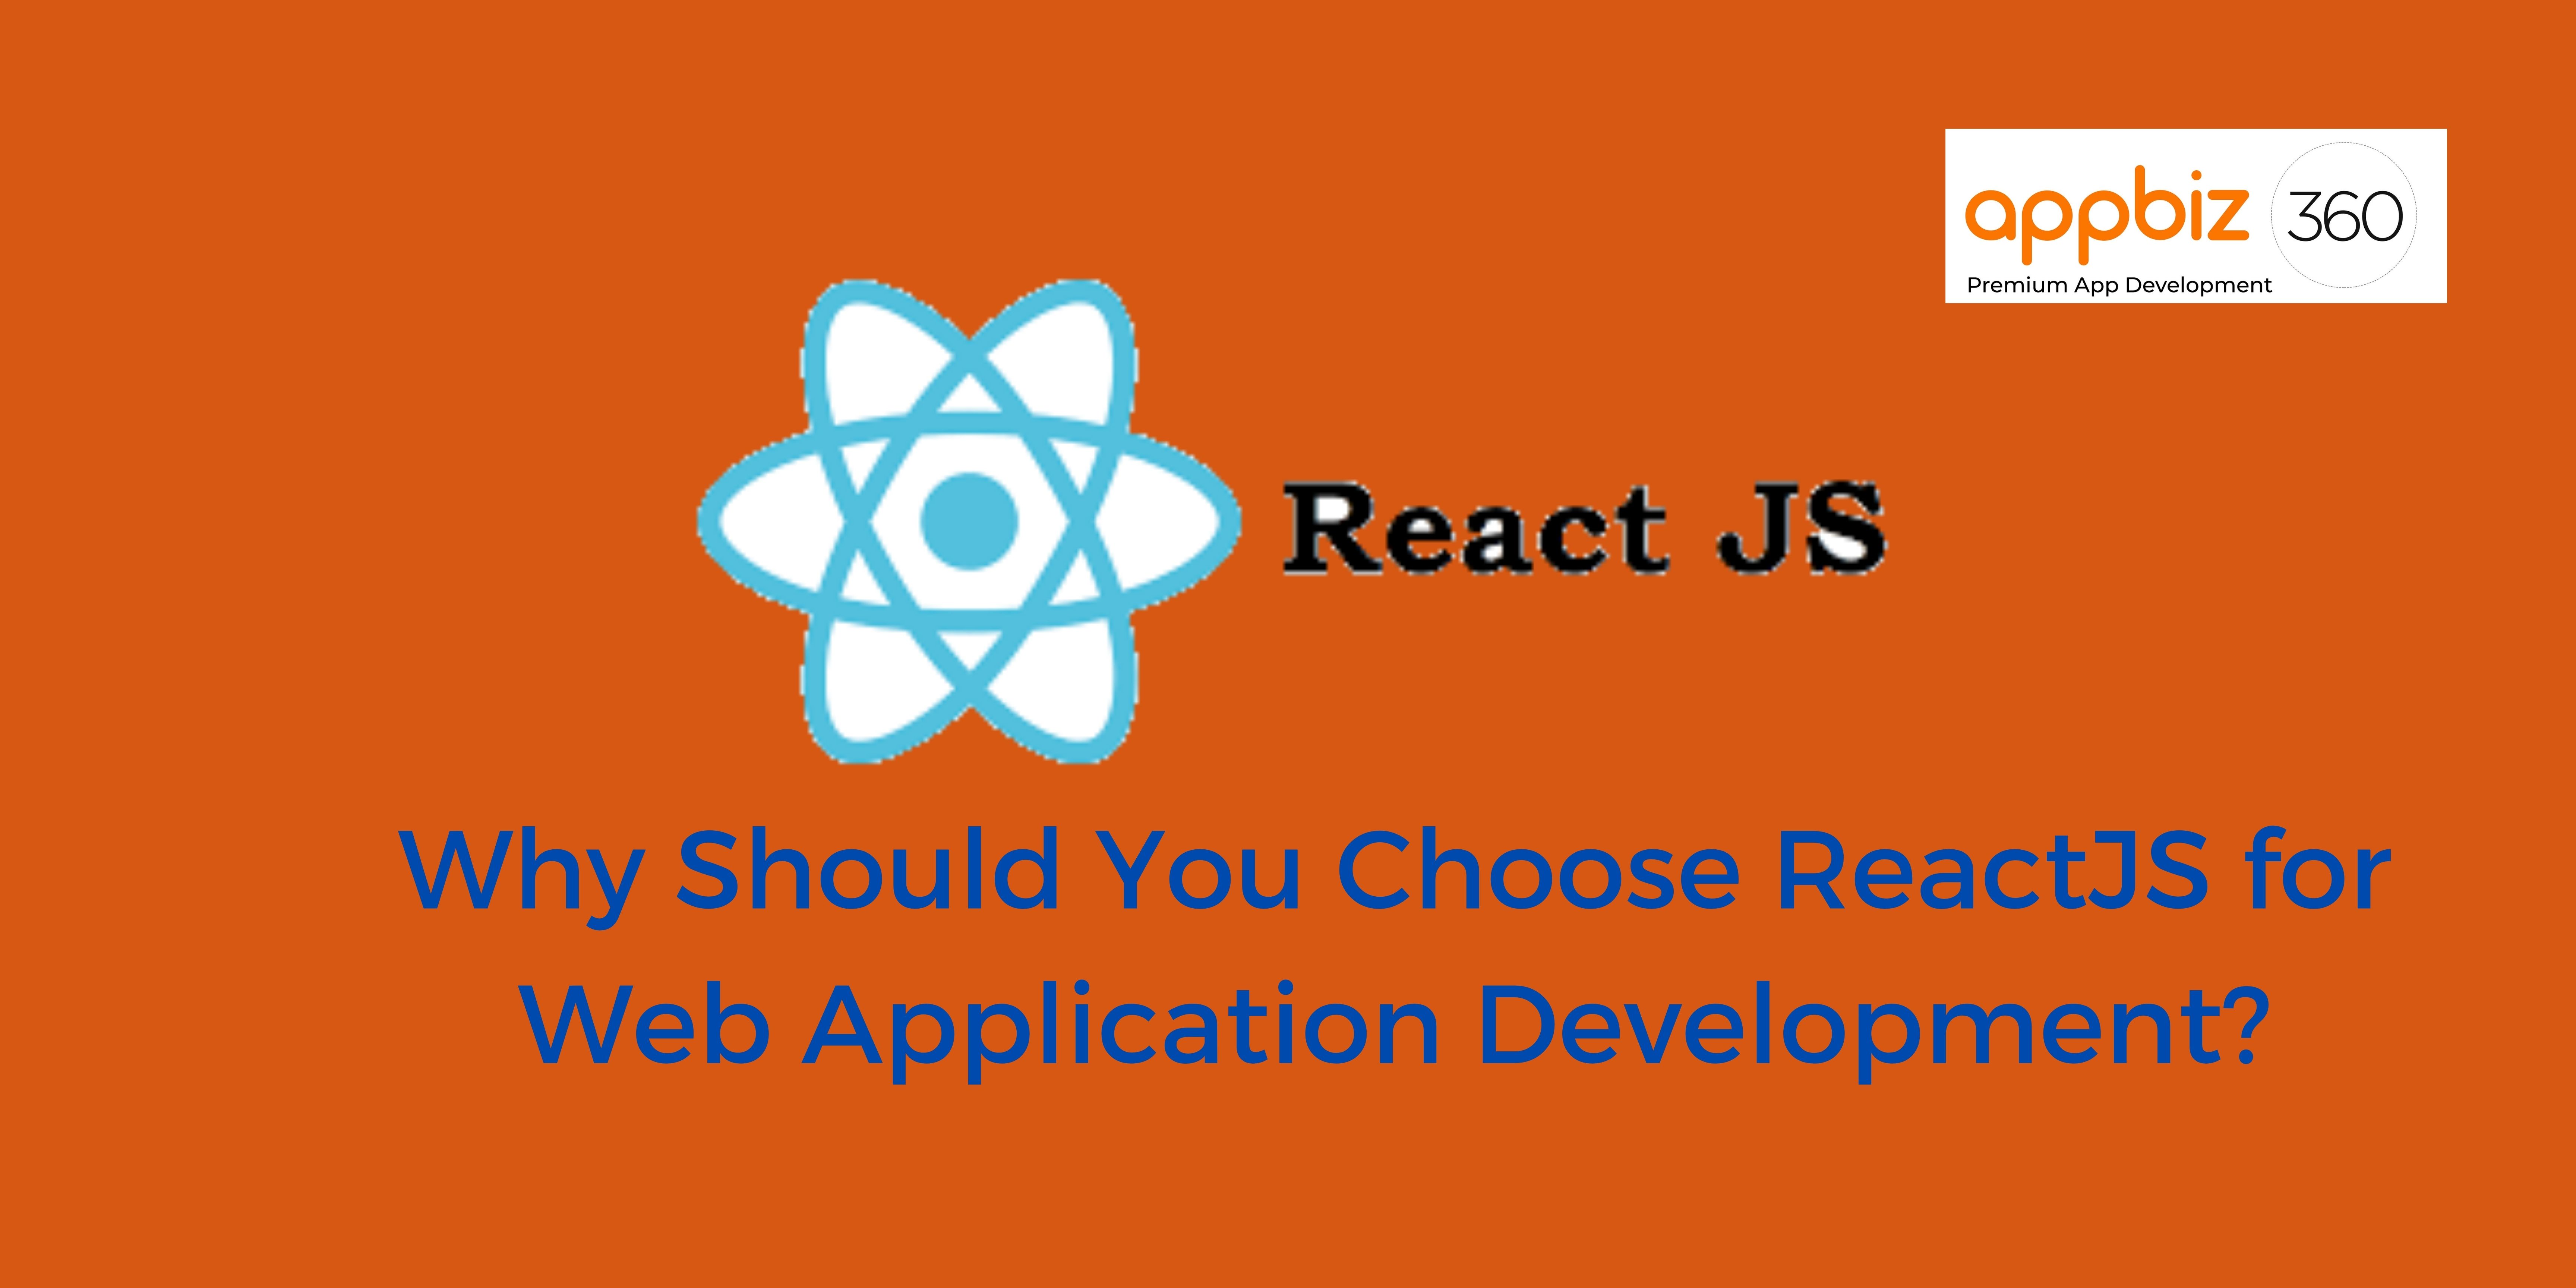 Why Should You Choose ReactJS for Web Application Development?